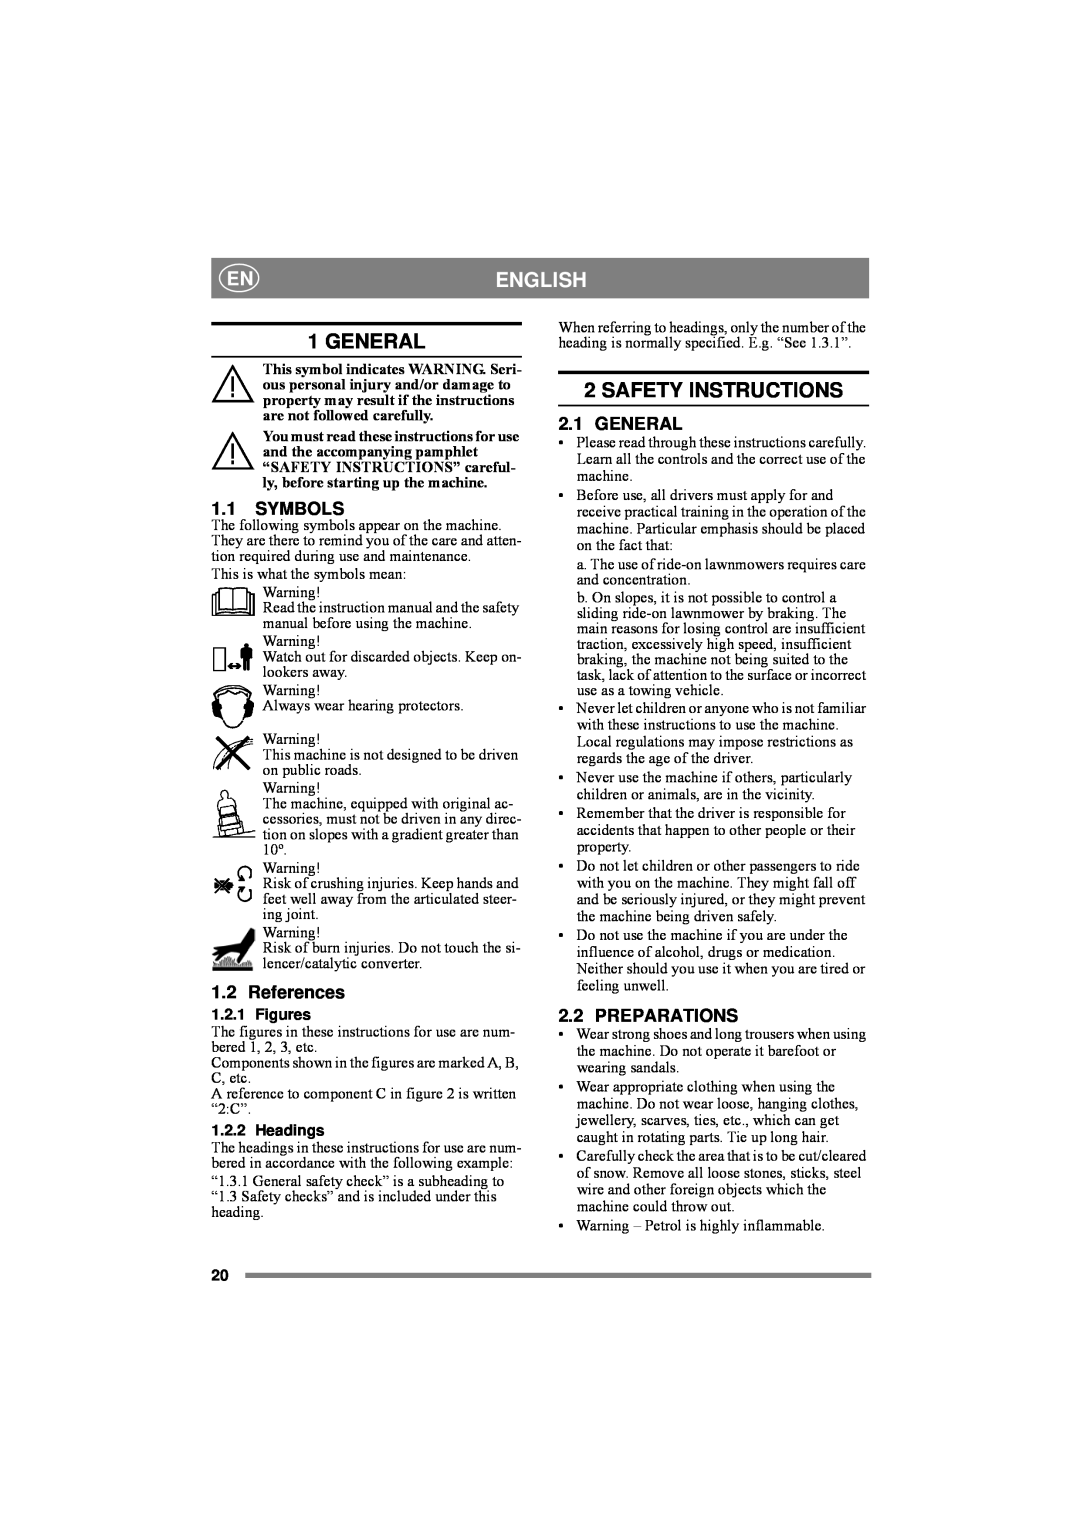 Stiga 8211-0072-80 manual Enenglish, General, Safety Instructions, 1.1SYMBOLS, References, Preparations, Figures, Headings 